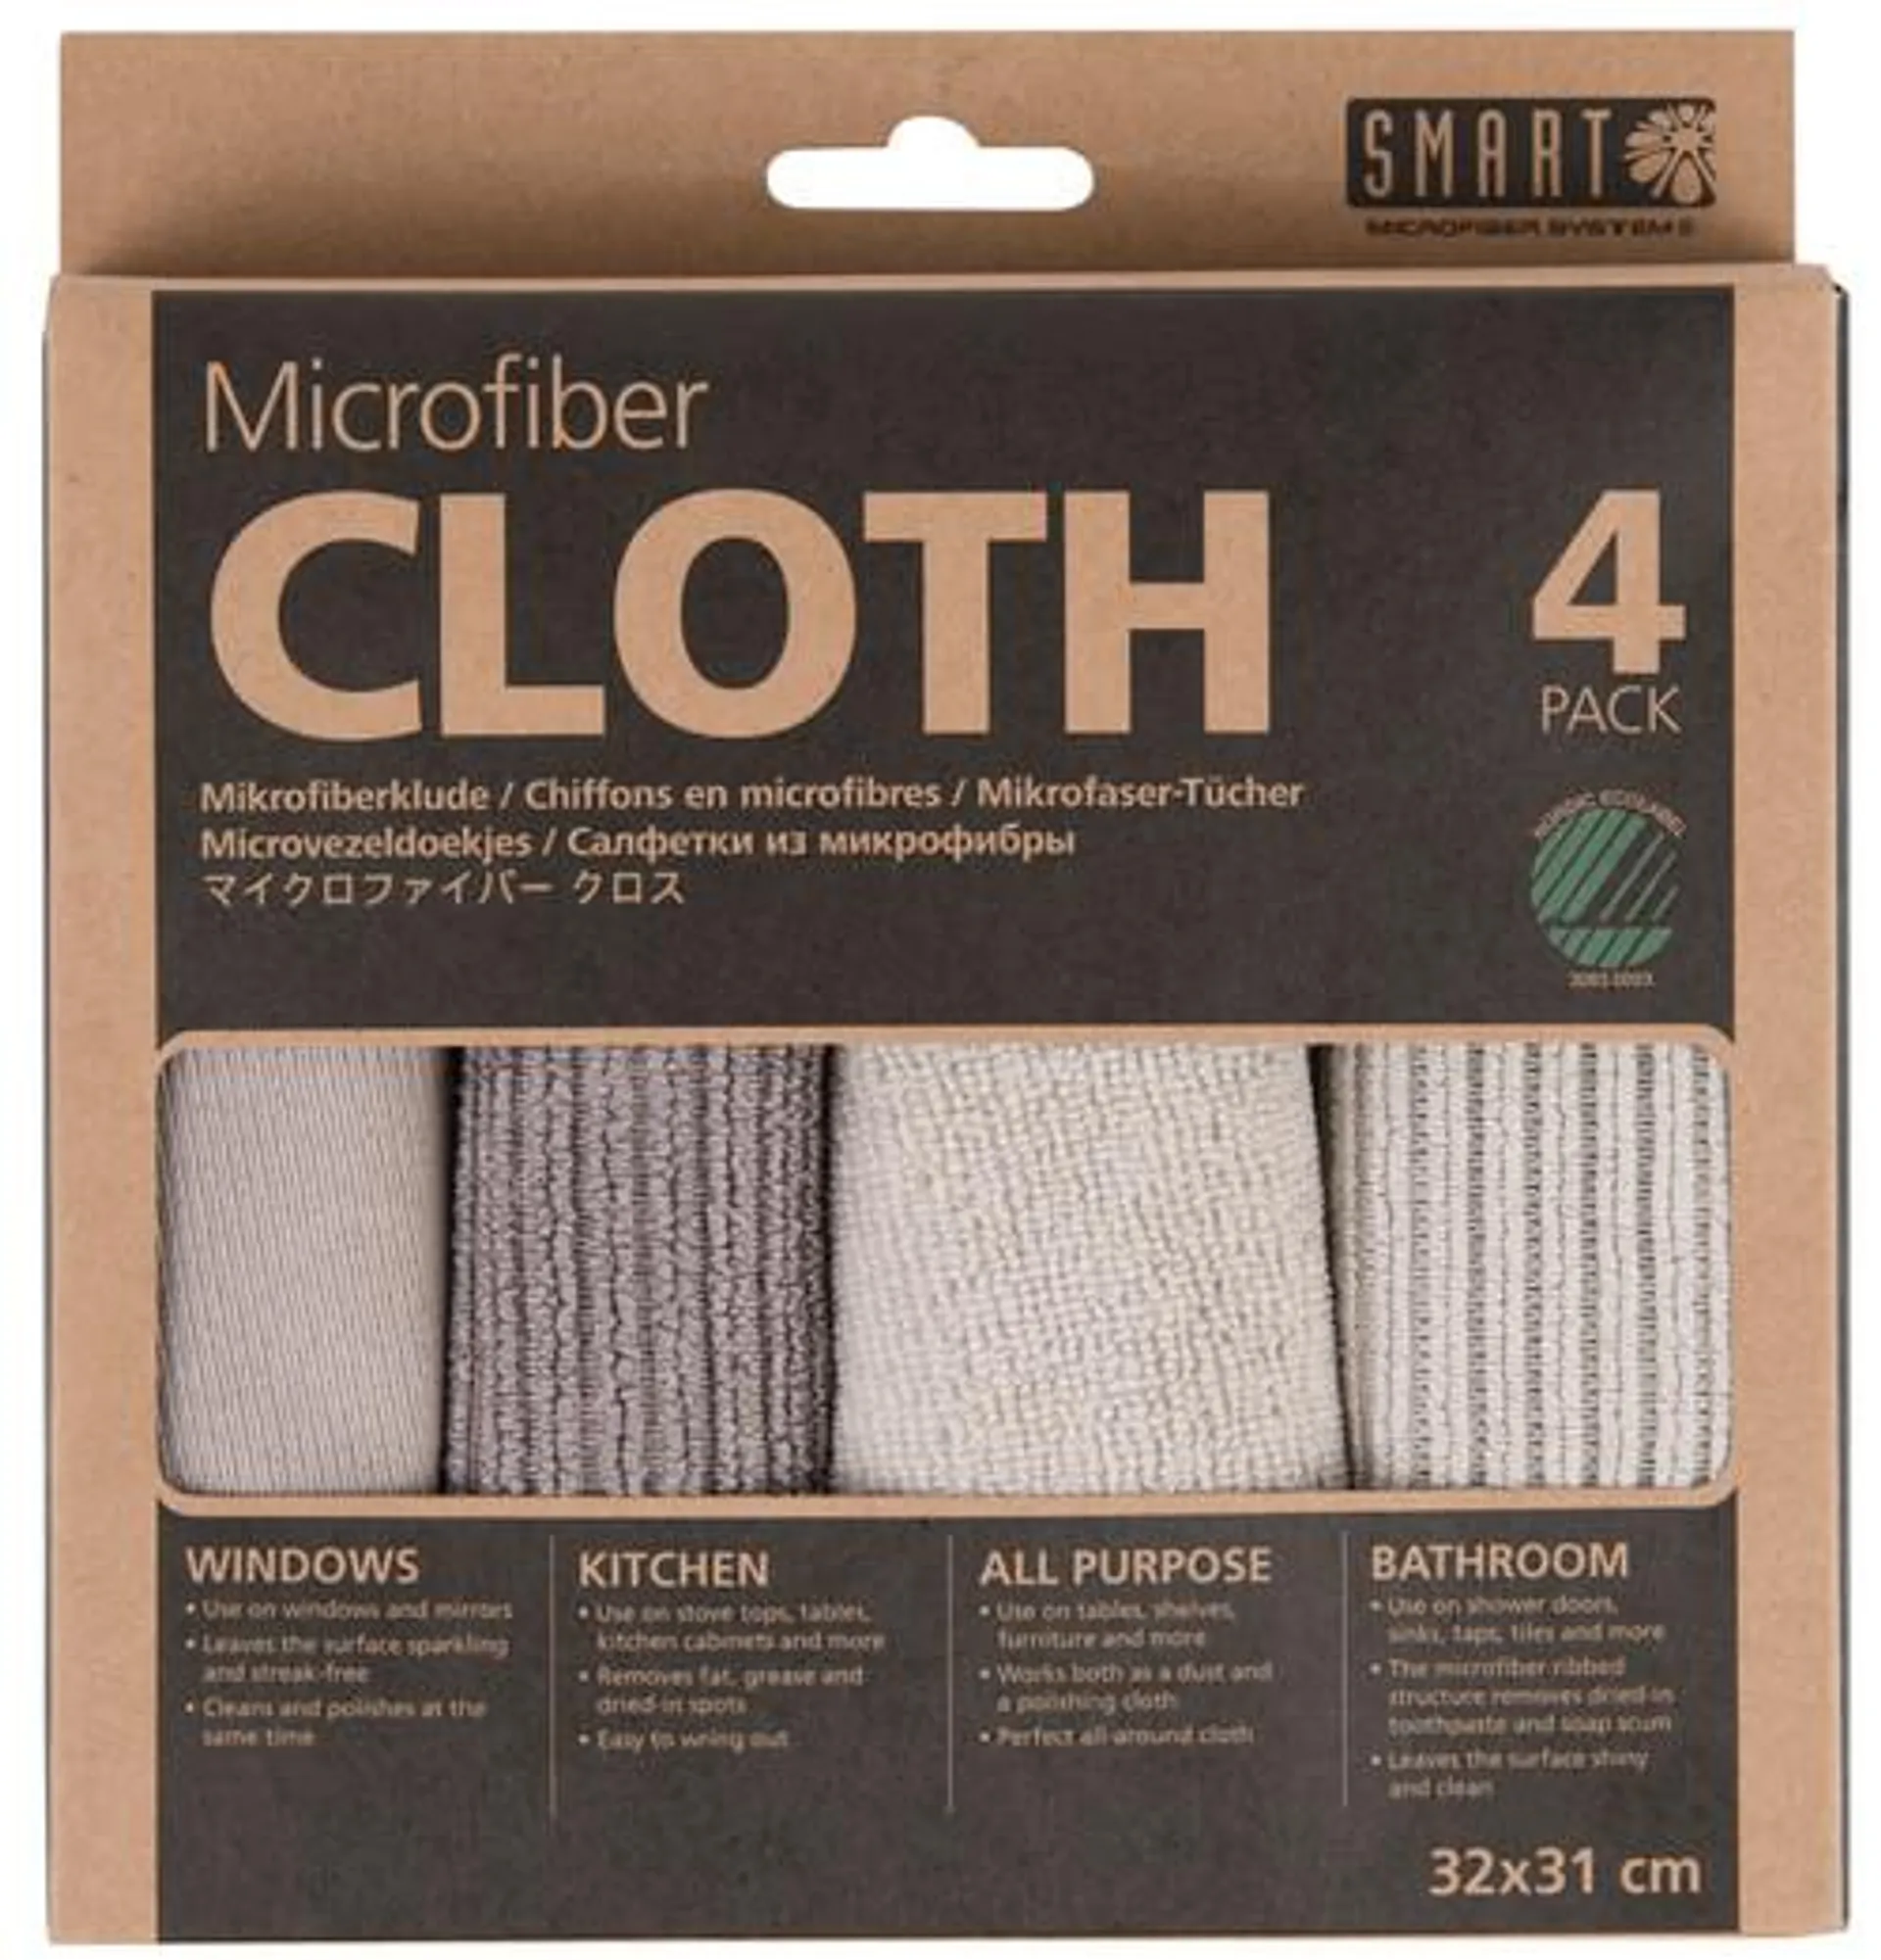 Smart Microfibre Cloth 4 Pack 32x31cm Beige/Grey